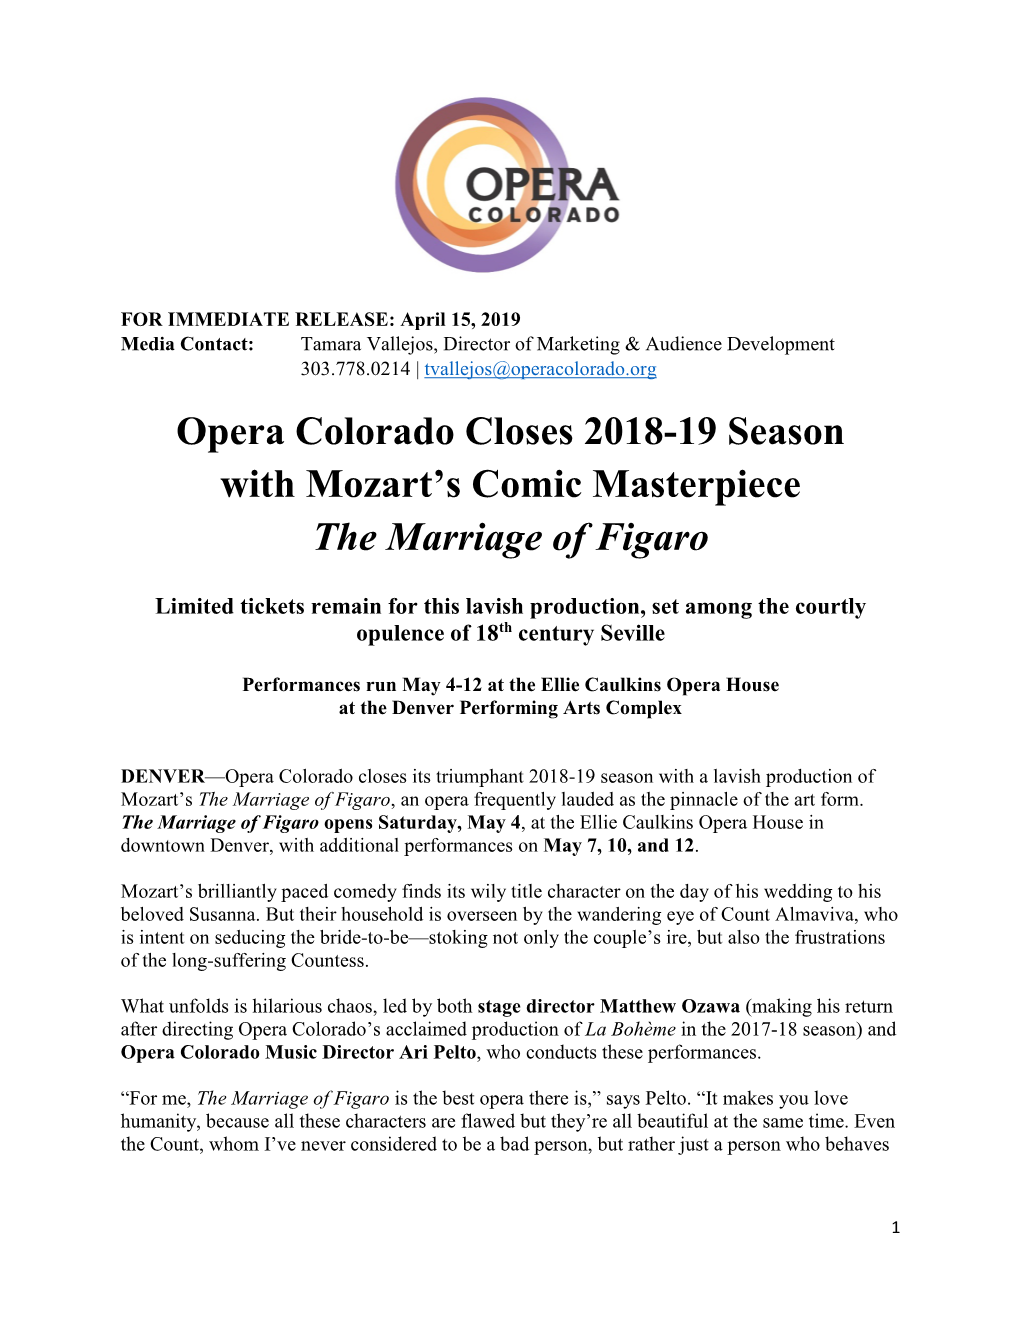 Opera Colorado Closes 2018-19 Season with Mozart's Comic